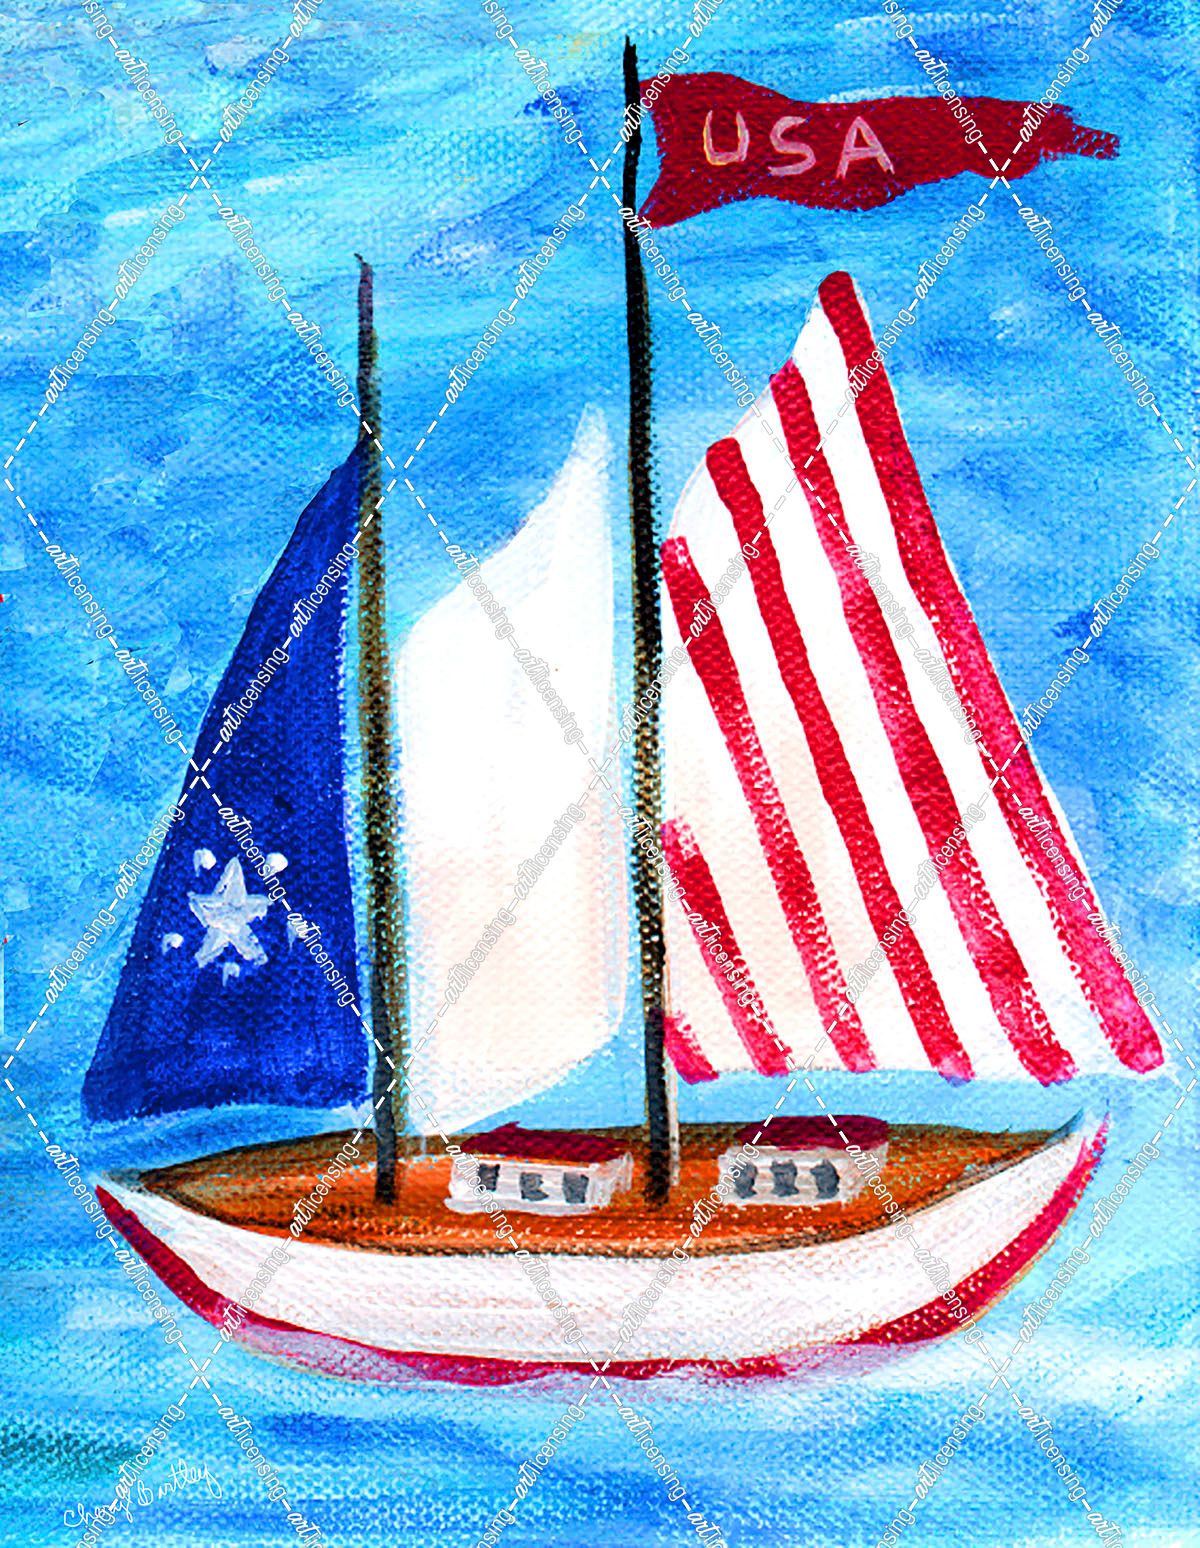 U.S.A. Sailboat